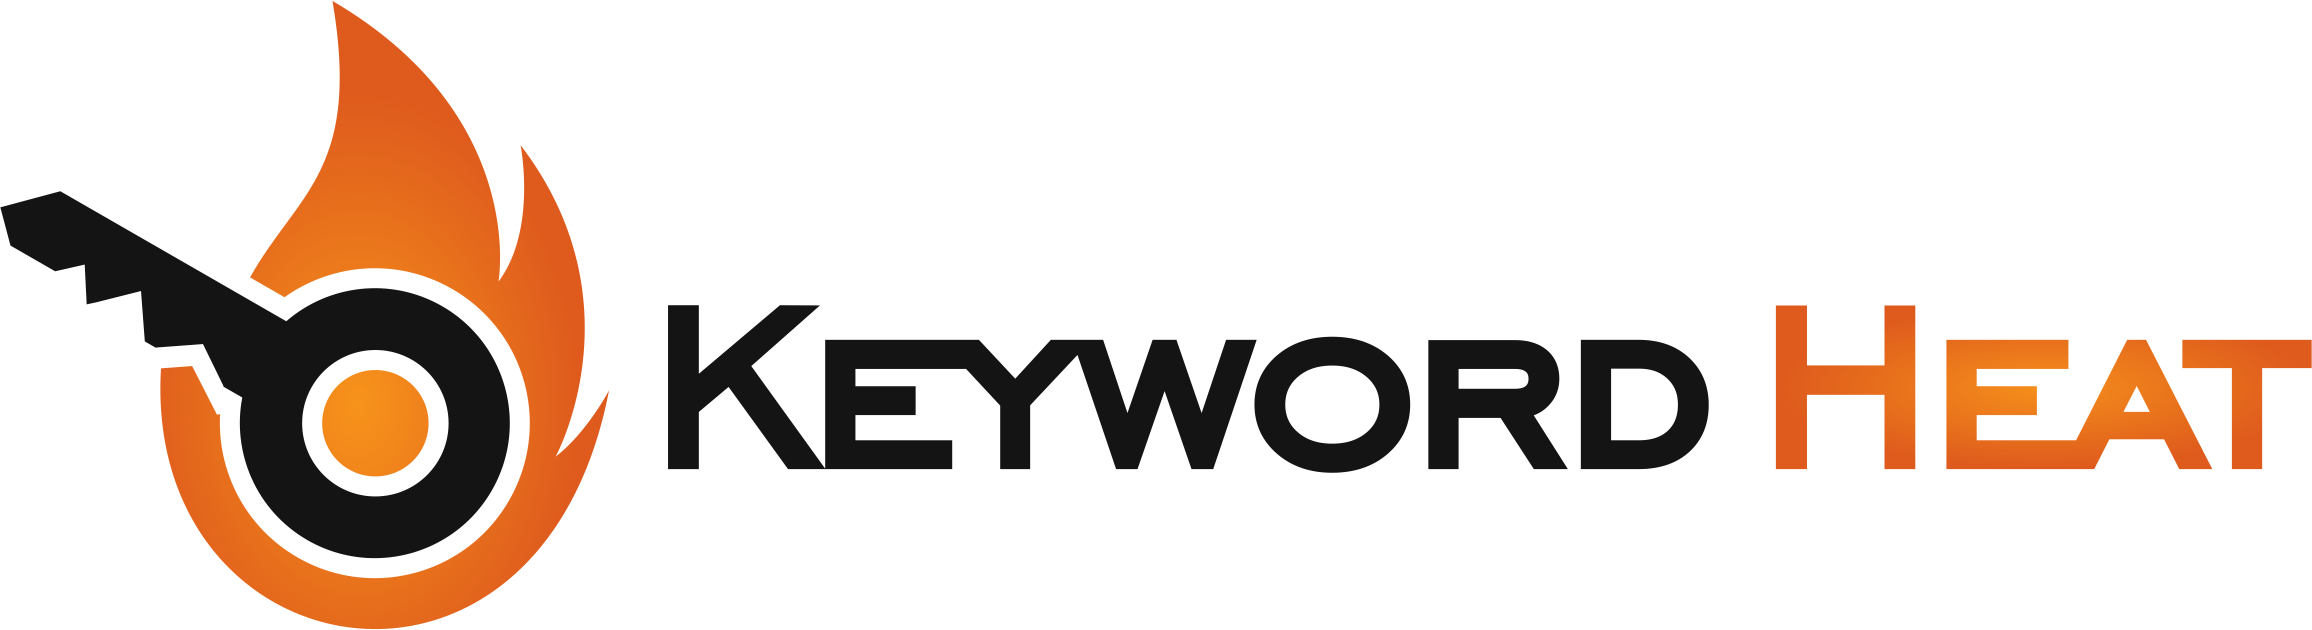 keyword heat logo